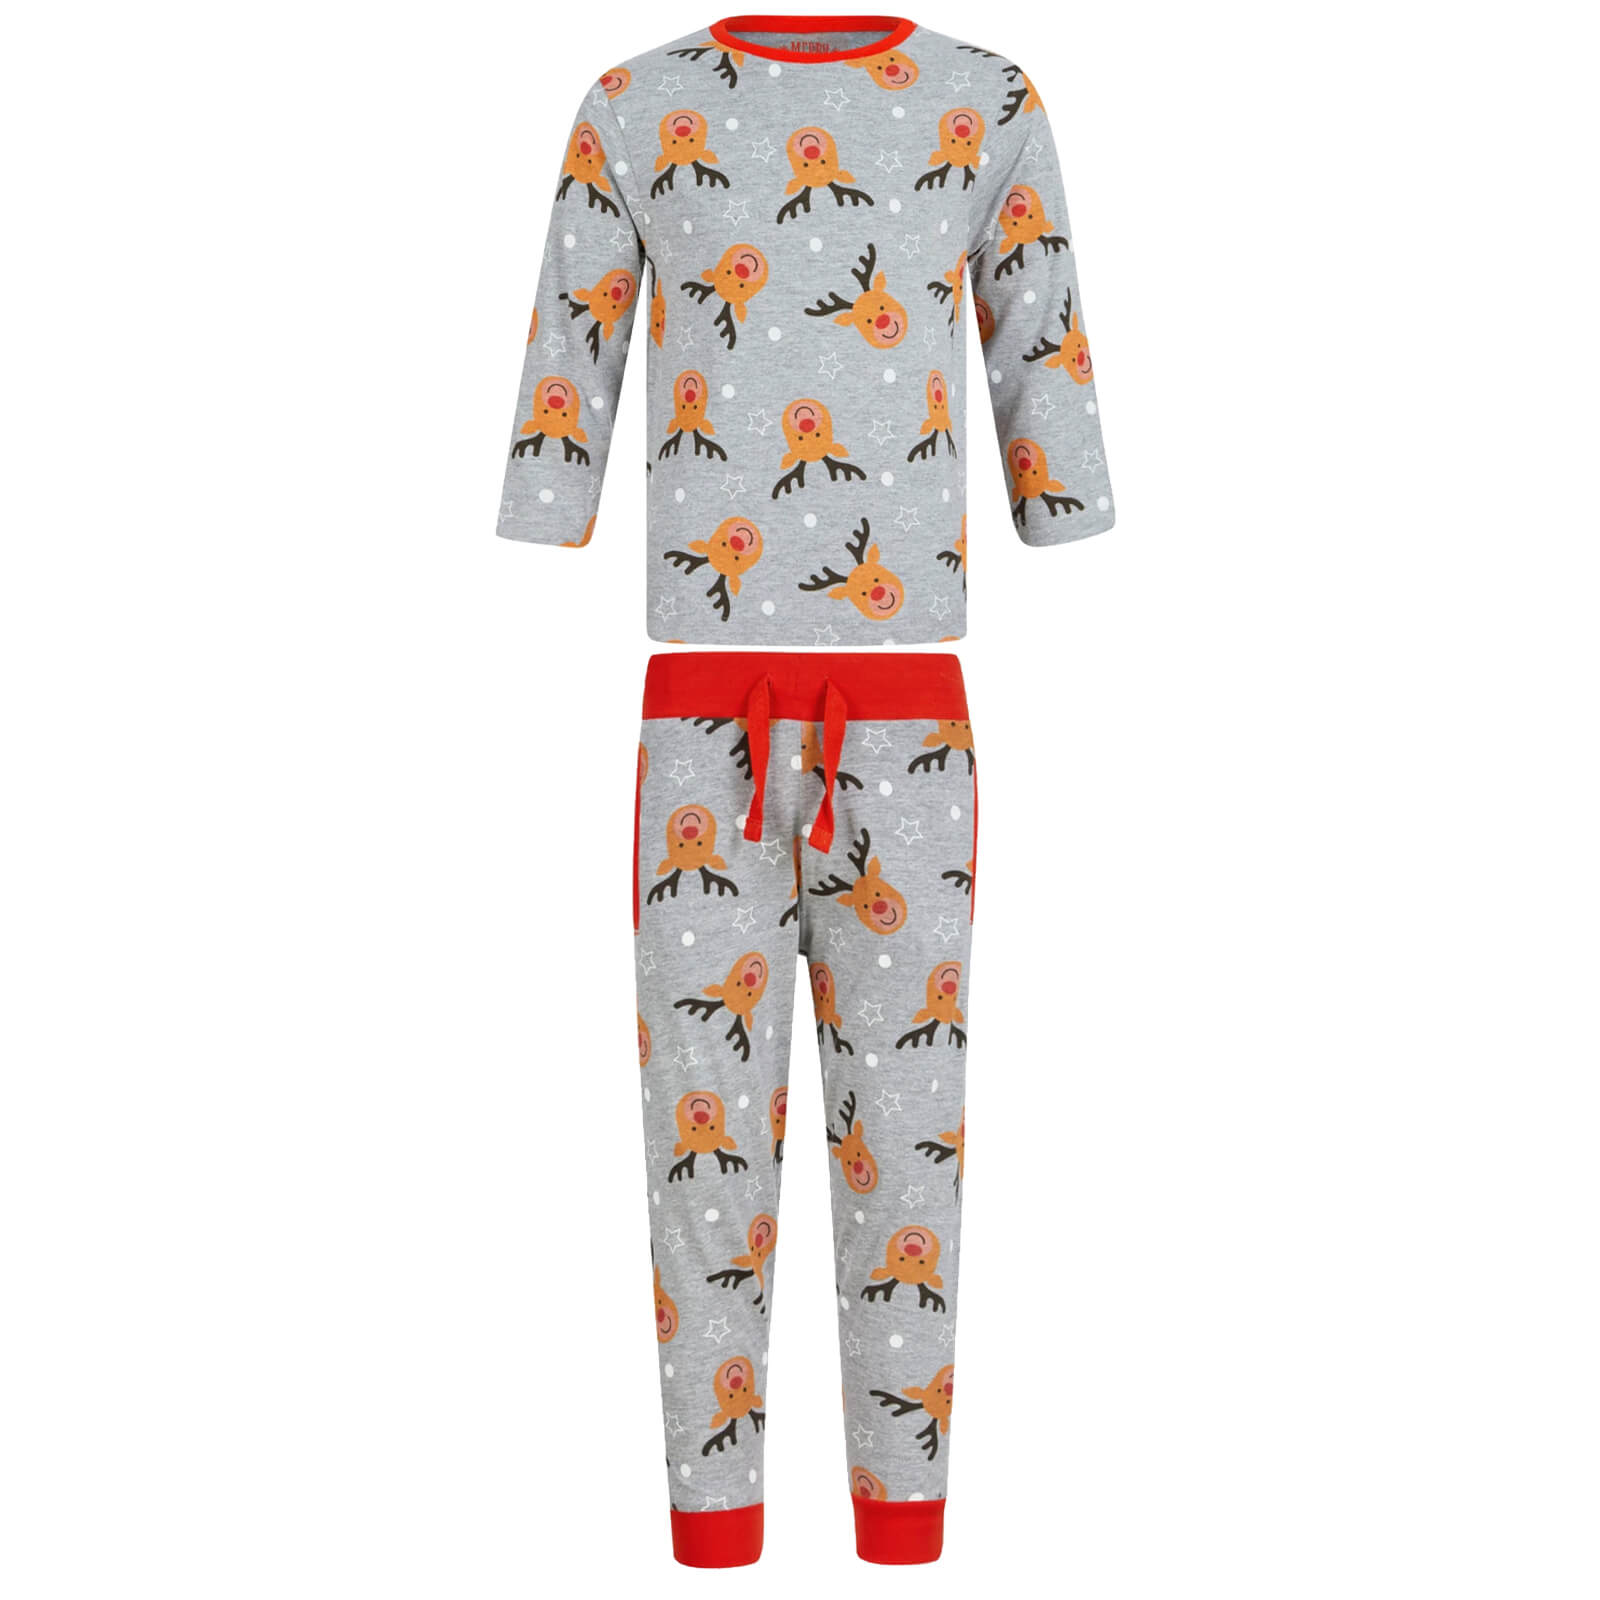 Mr Crimbo Boys Kids Christmas Pyjama Set Rudolph Print - MrCrimbo.co.uk -SRG2Q17463_F - Grey -11-13 years